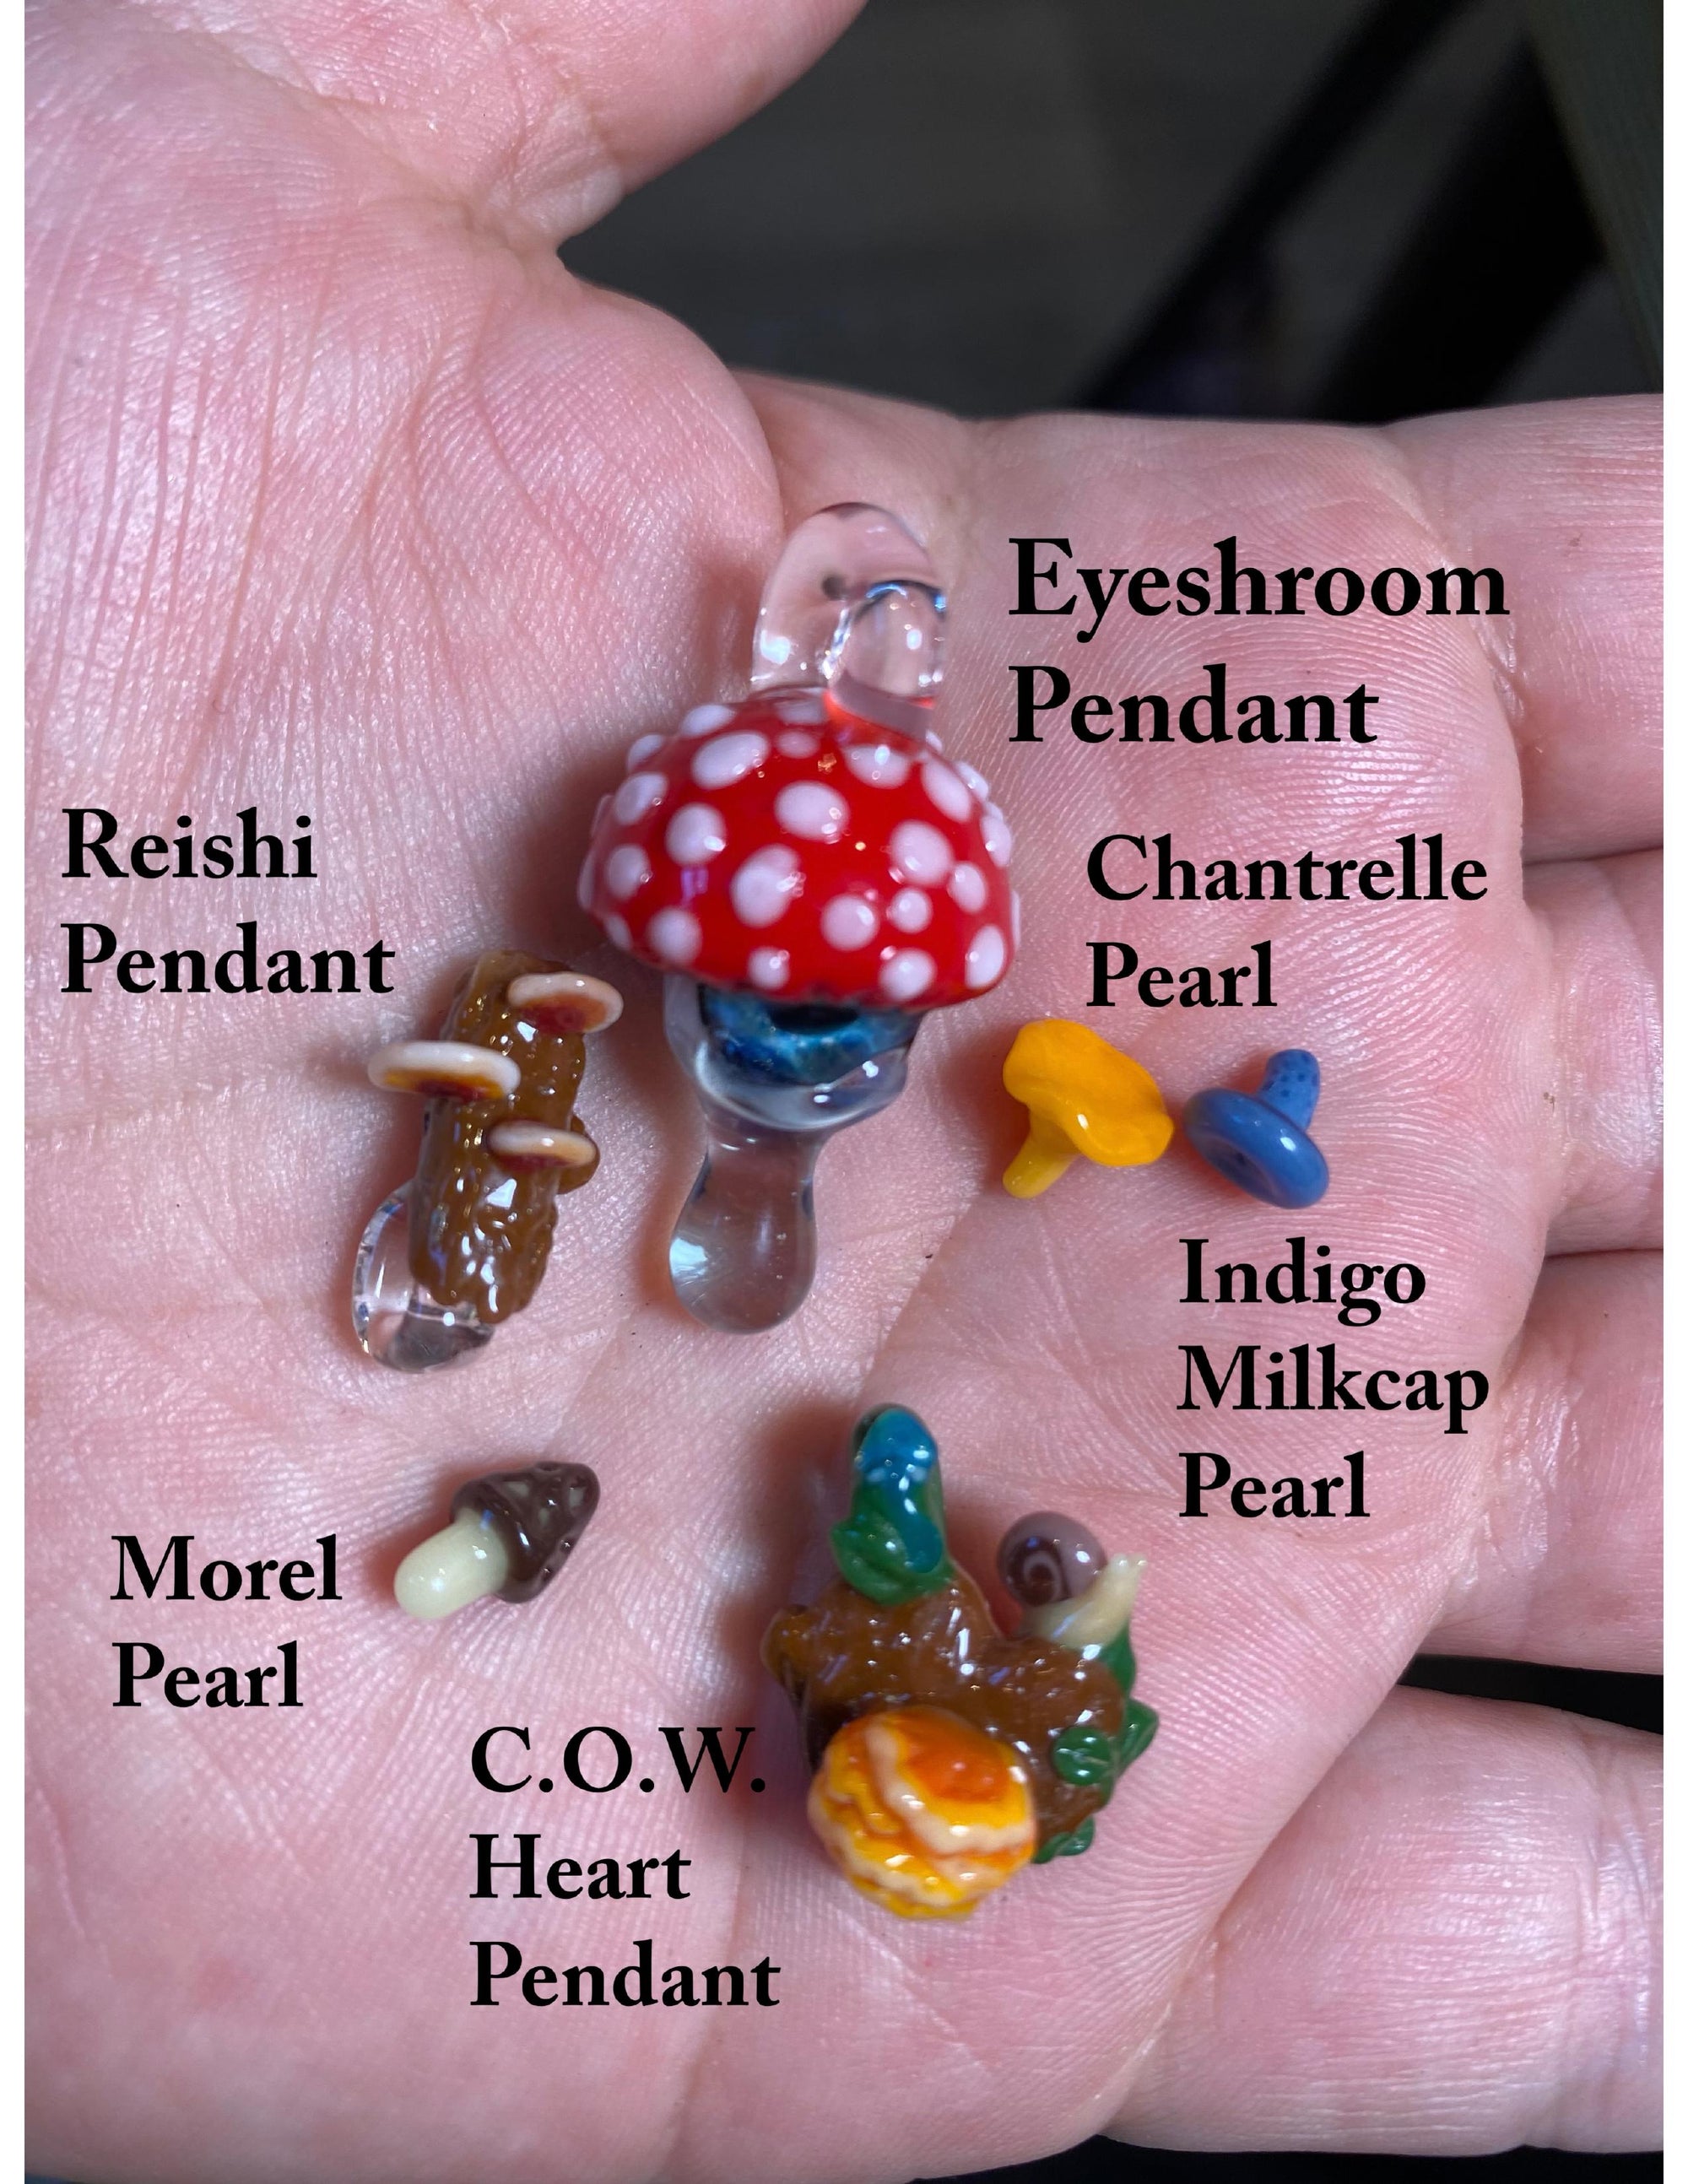 DeMatteo "Mushroom" Pendants and Terp Pearls